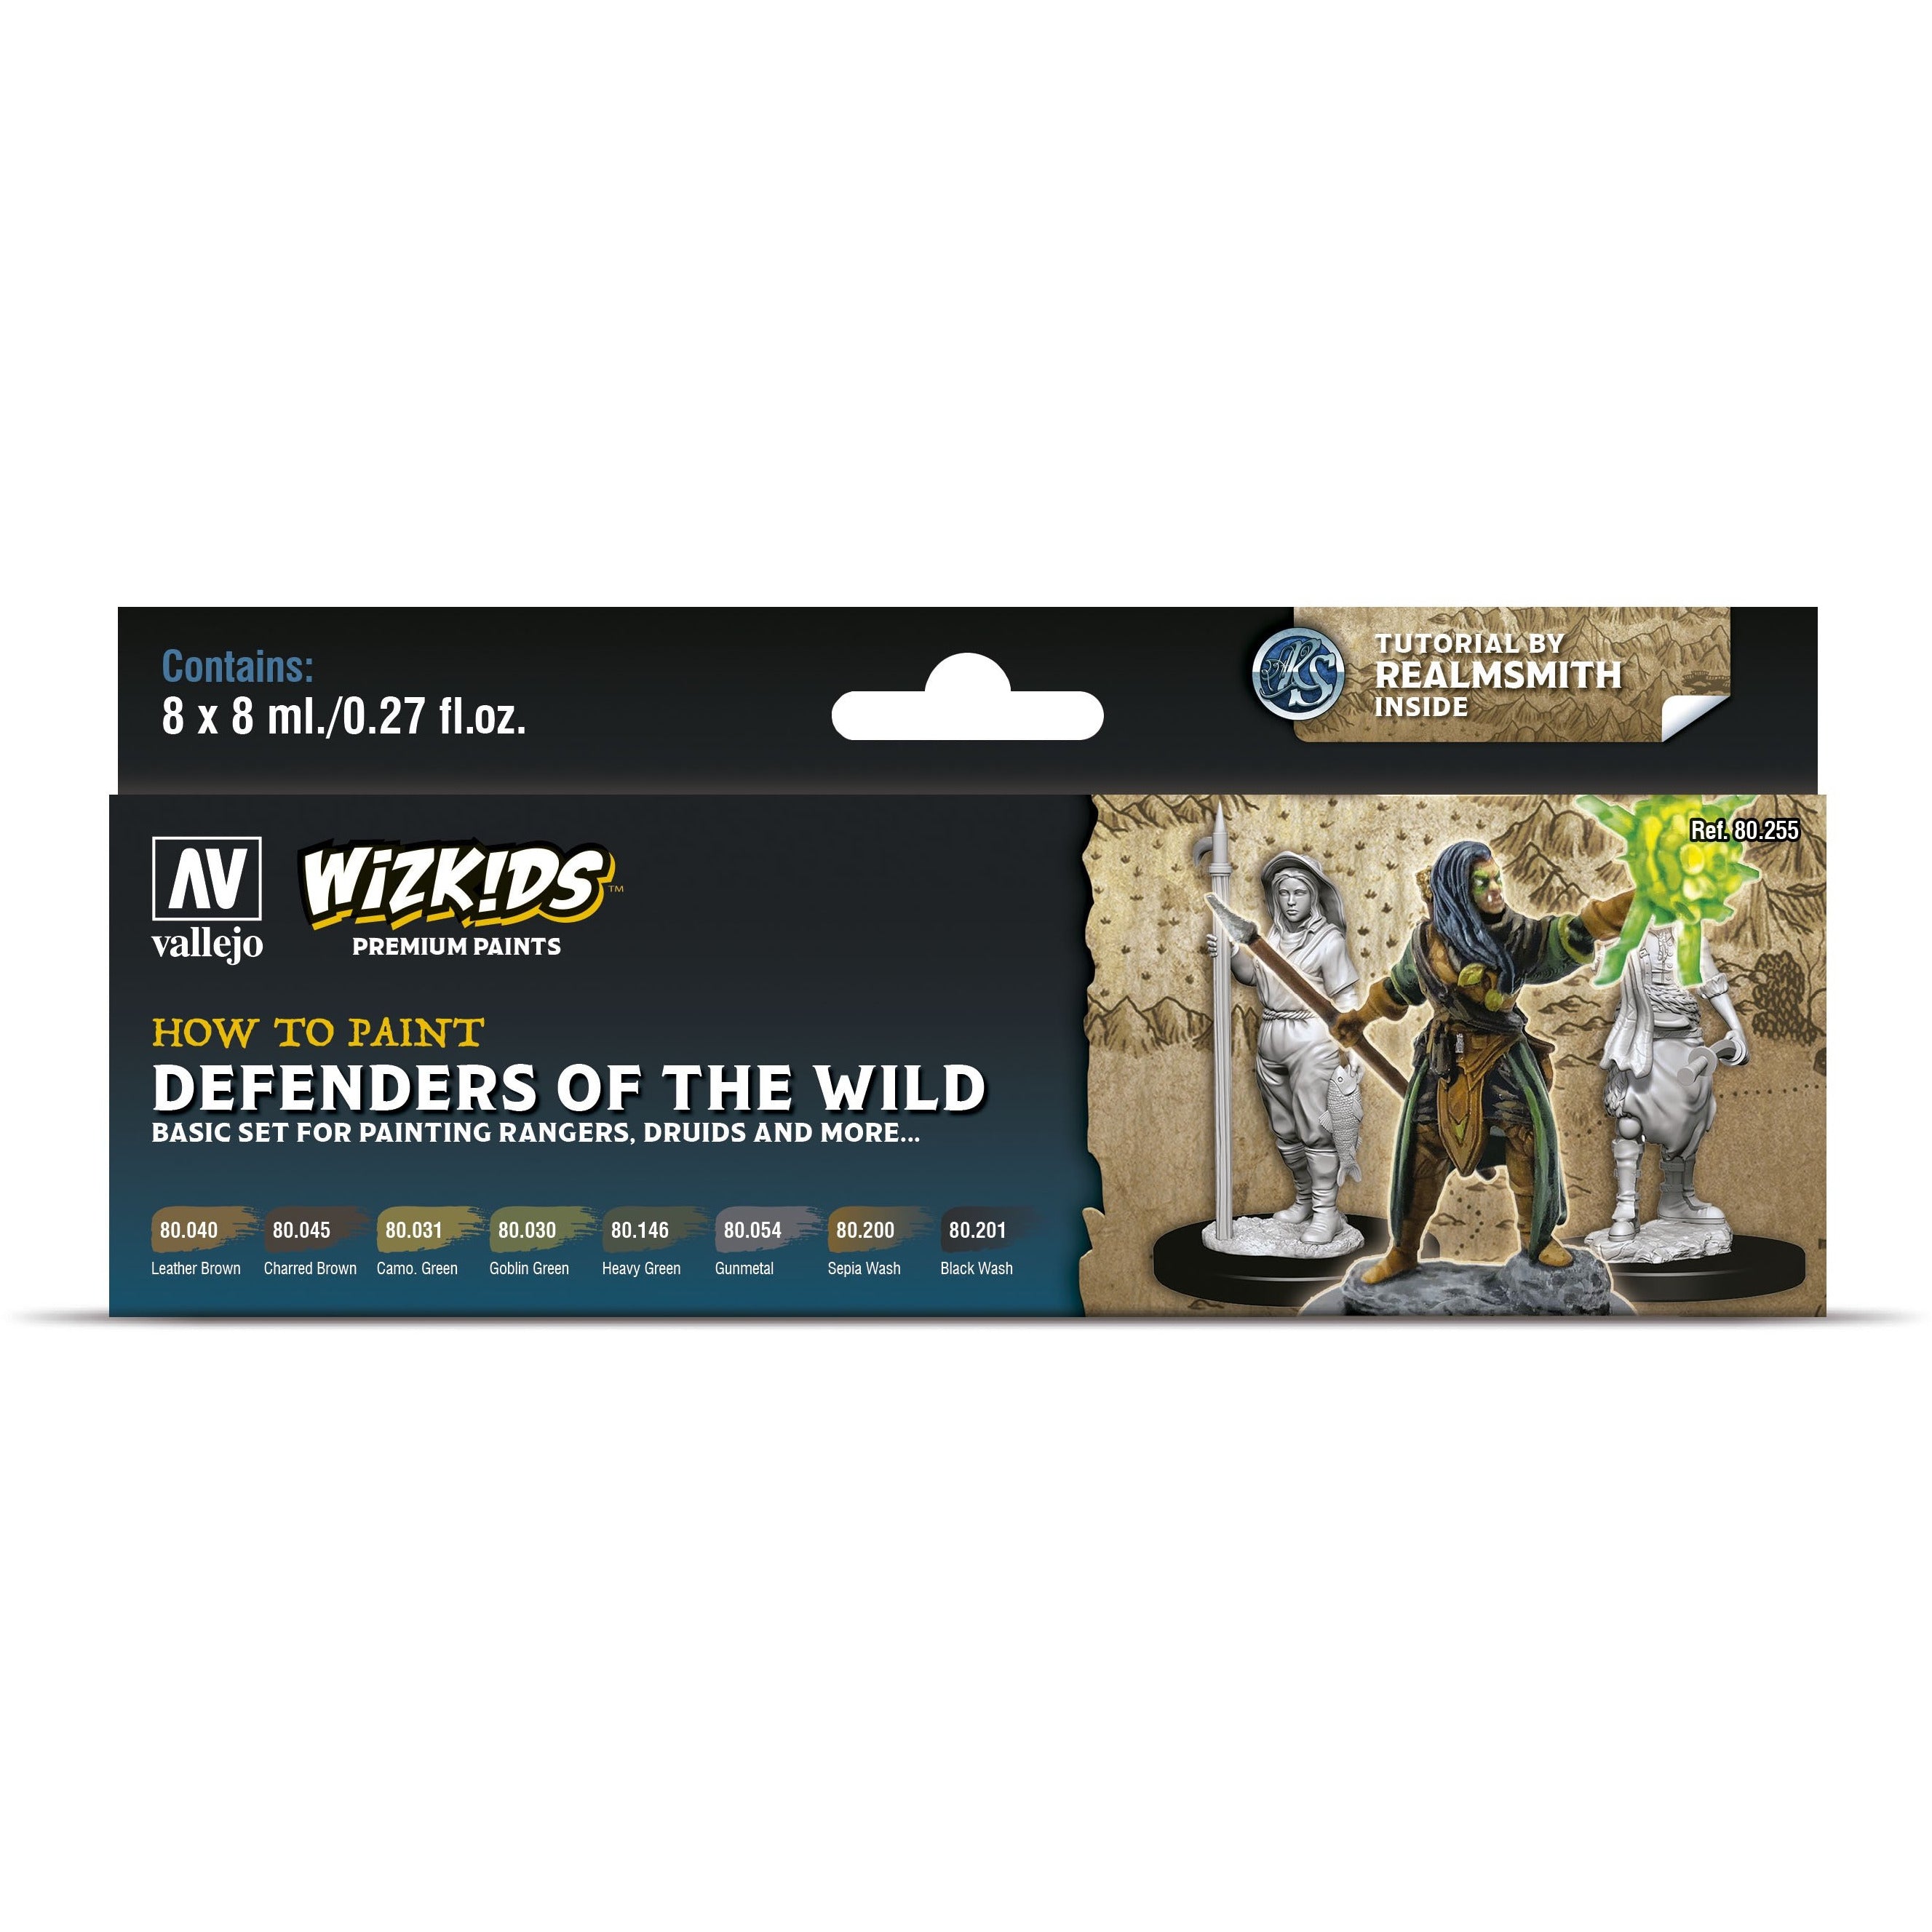 VAL80255 WIZKIDS Premium Paint Set Defenders of the Wild